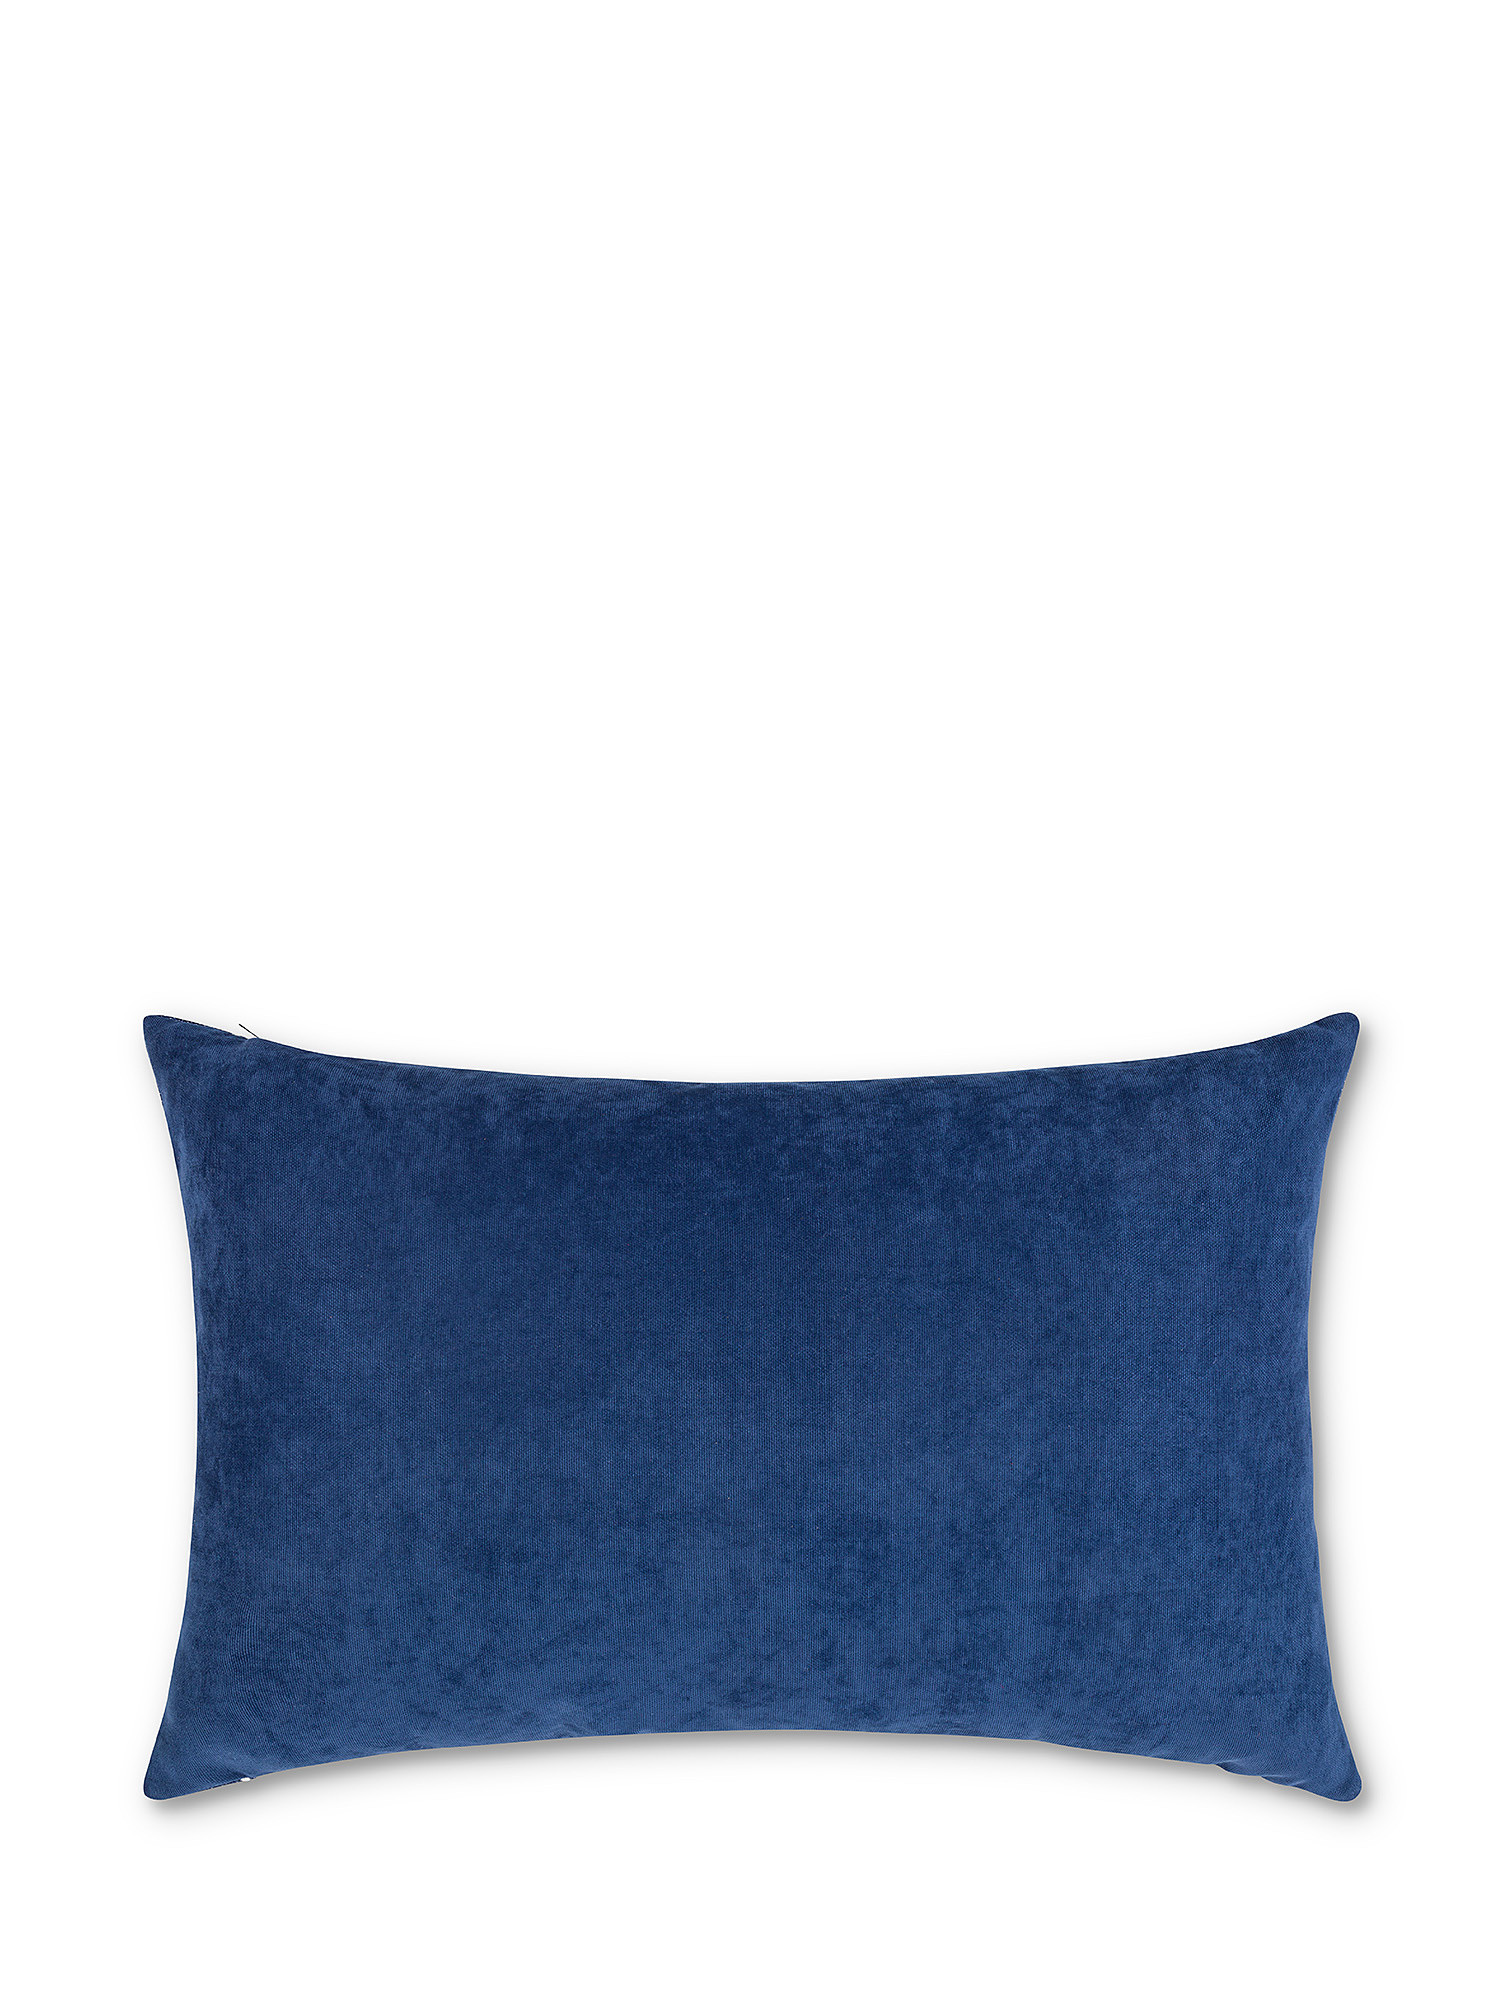 Cuscino tessuto motivo a righe 35x55cm, Blu, large image number 1